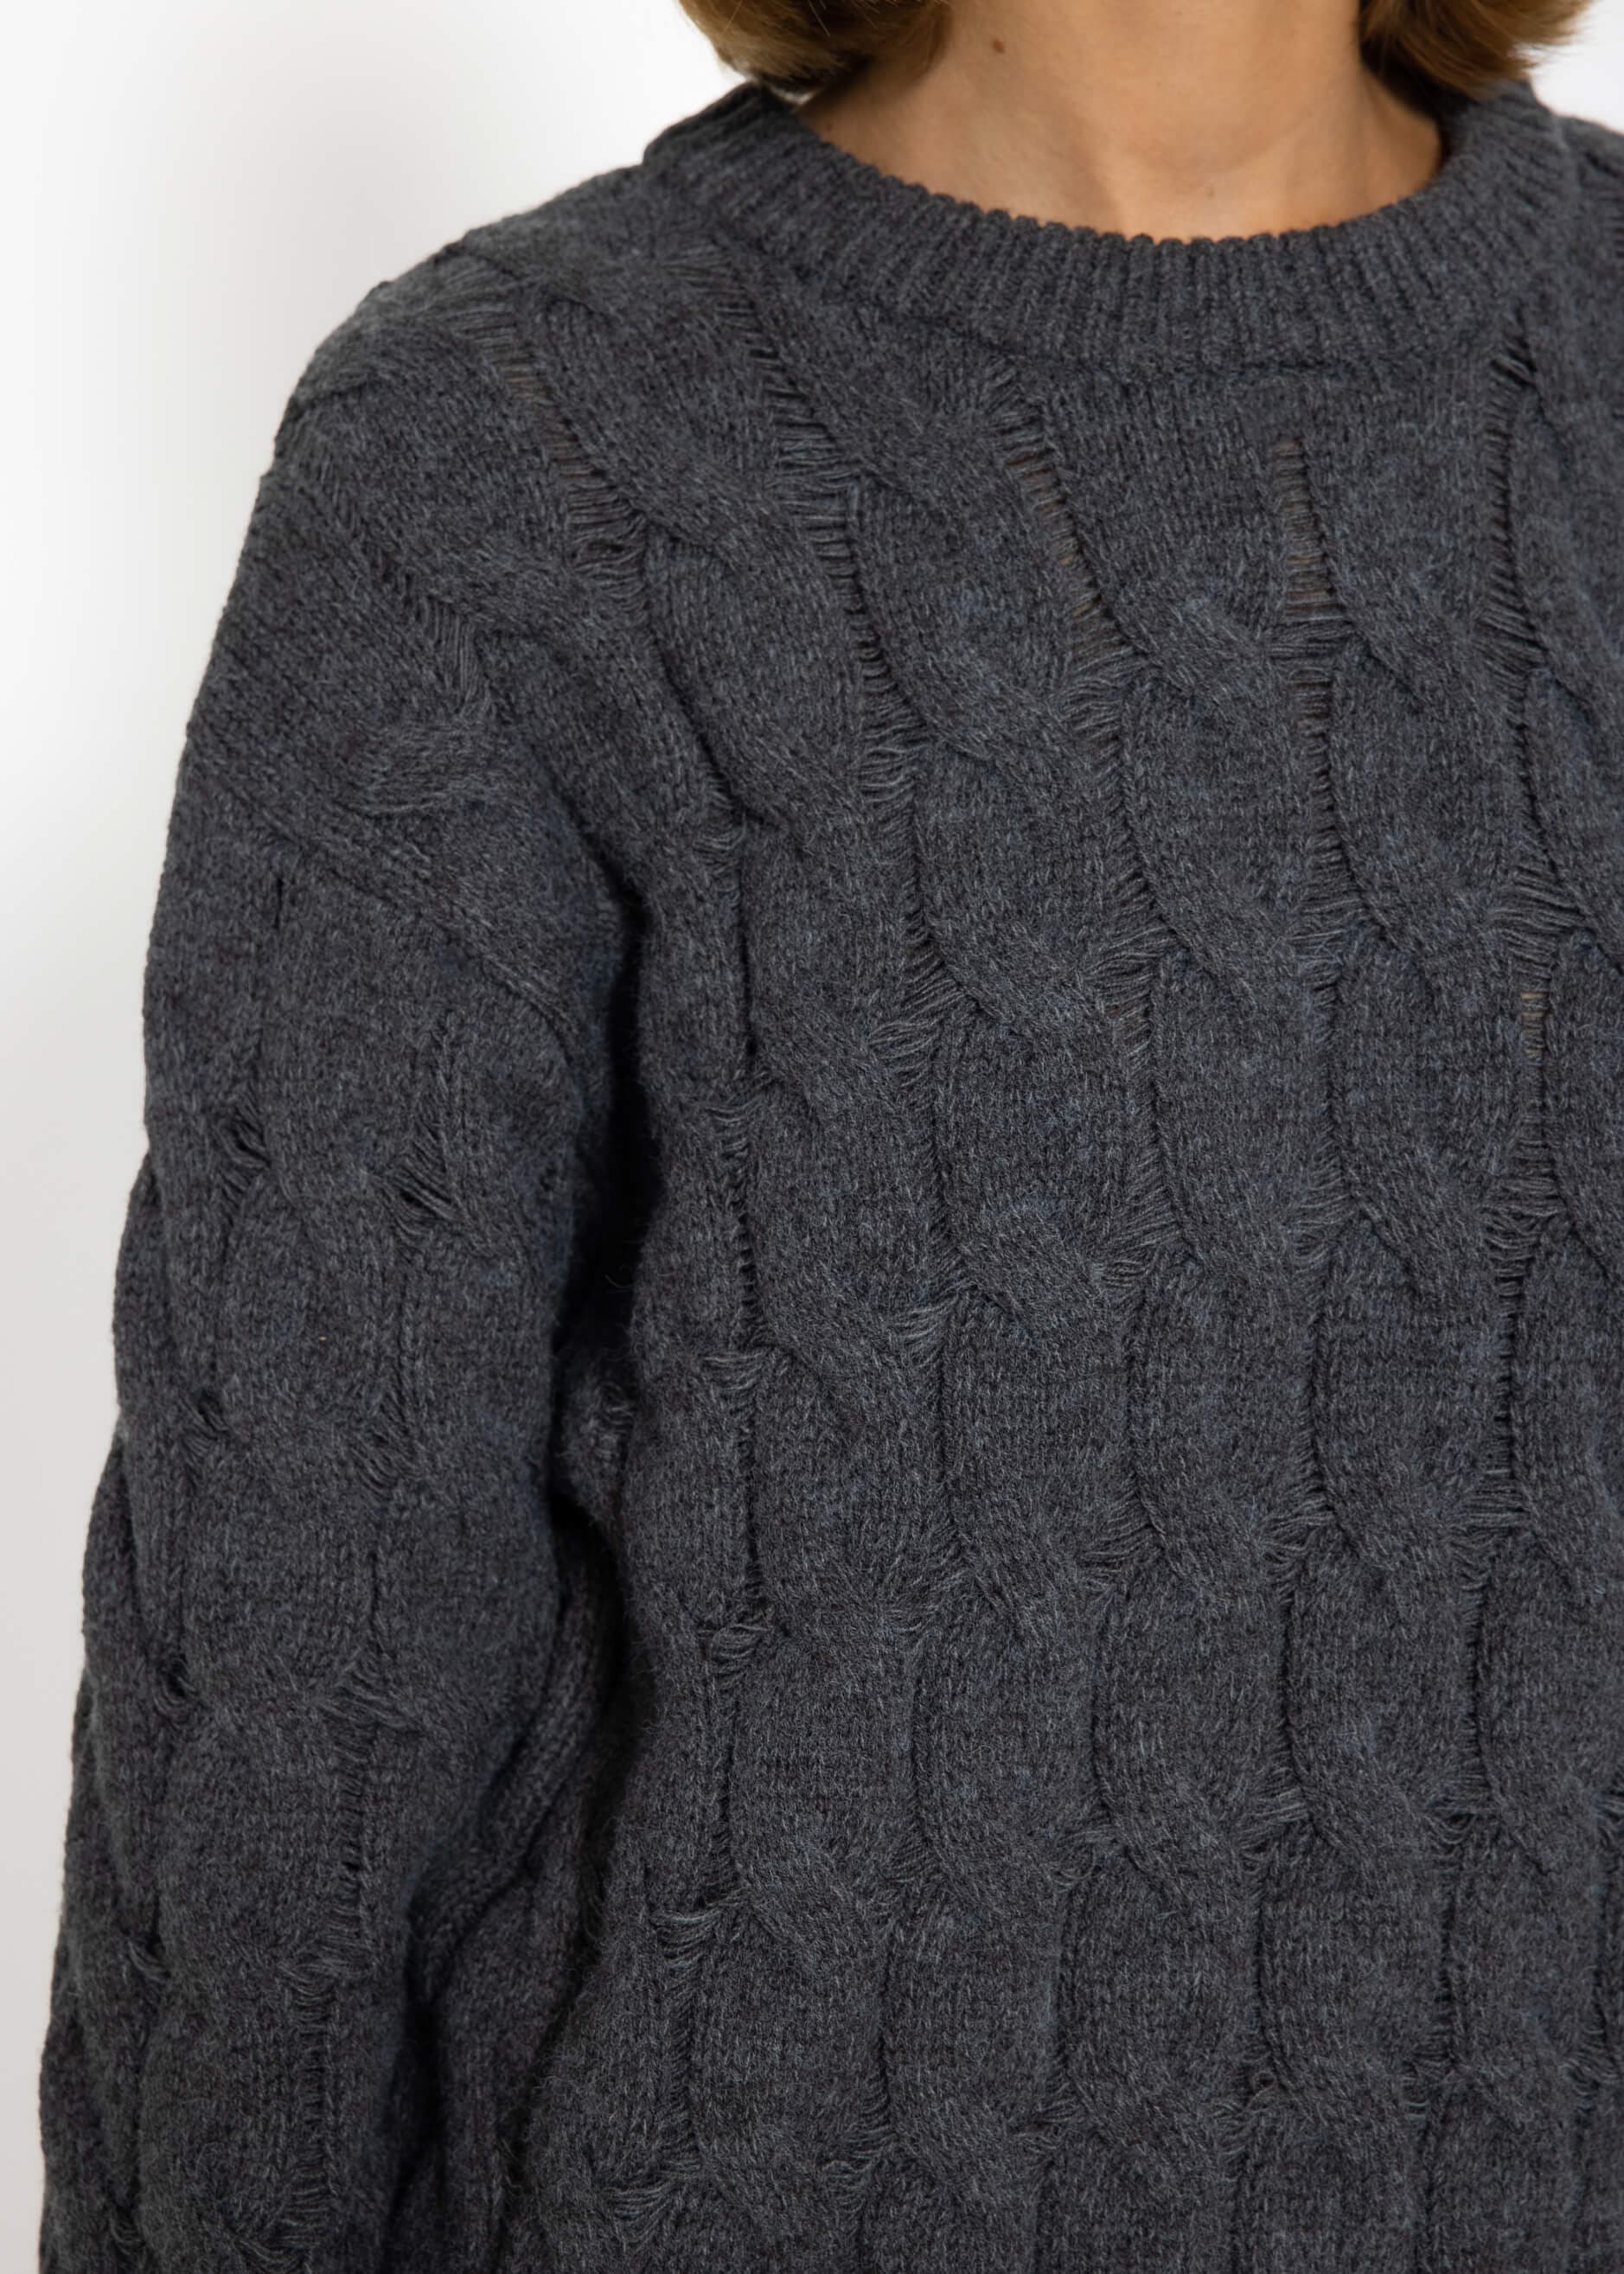 Bekleidung - mit SASSYCLASSY Strickpullover Pullover | Zopfmuster | | dunkelgrau